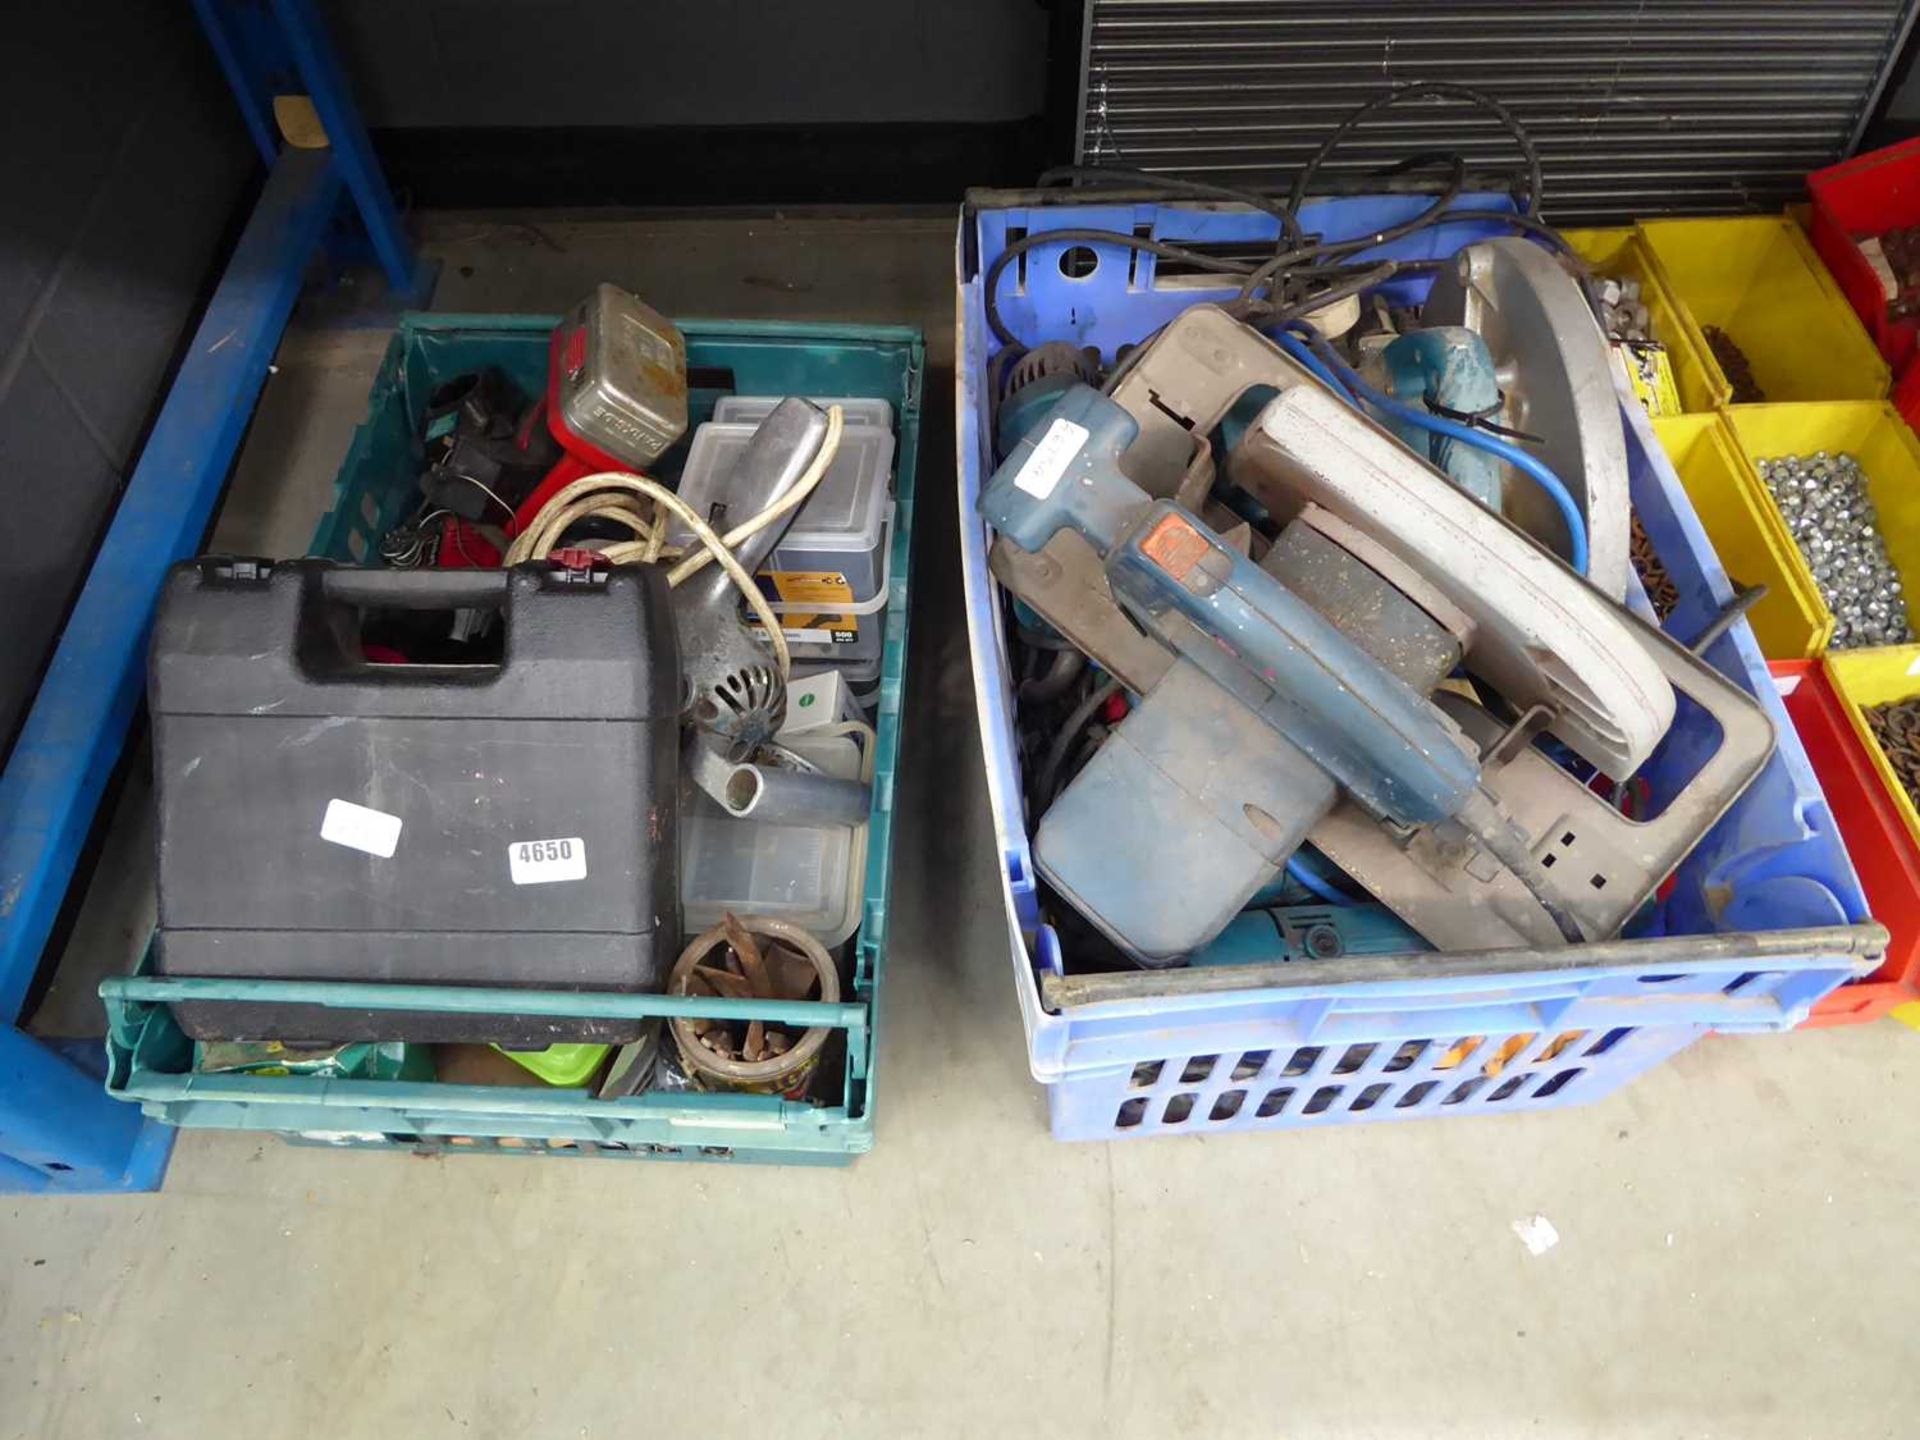 2 x boxes containing various tools including circular saws, drills, hot air guns, etc